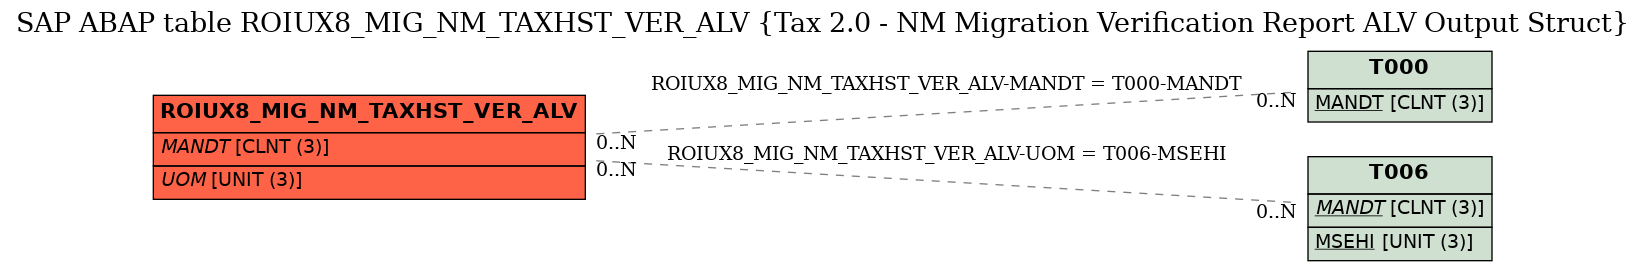 E-R Diagram for table ROIUX8_MIG_NM_TAXHST_VER_ALV (Tax 2.0 - NM Migration Verification Report ALV Output Struct)